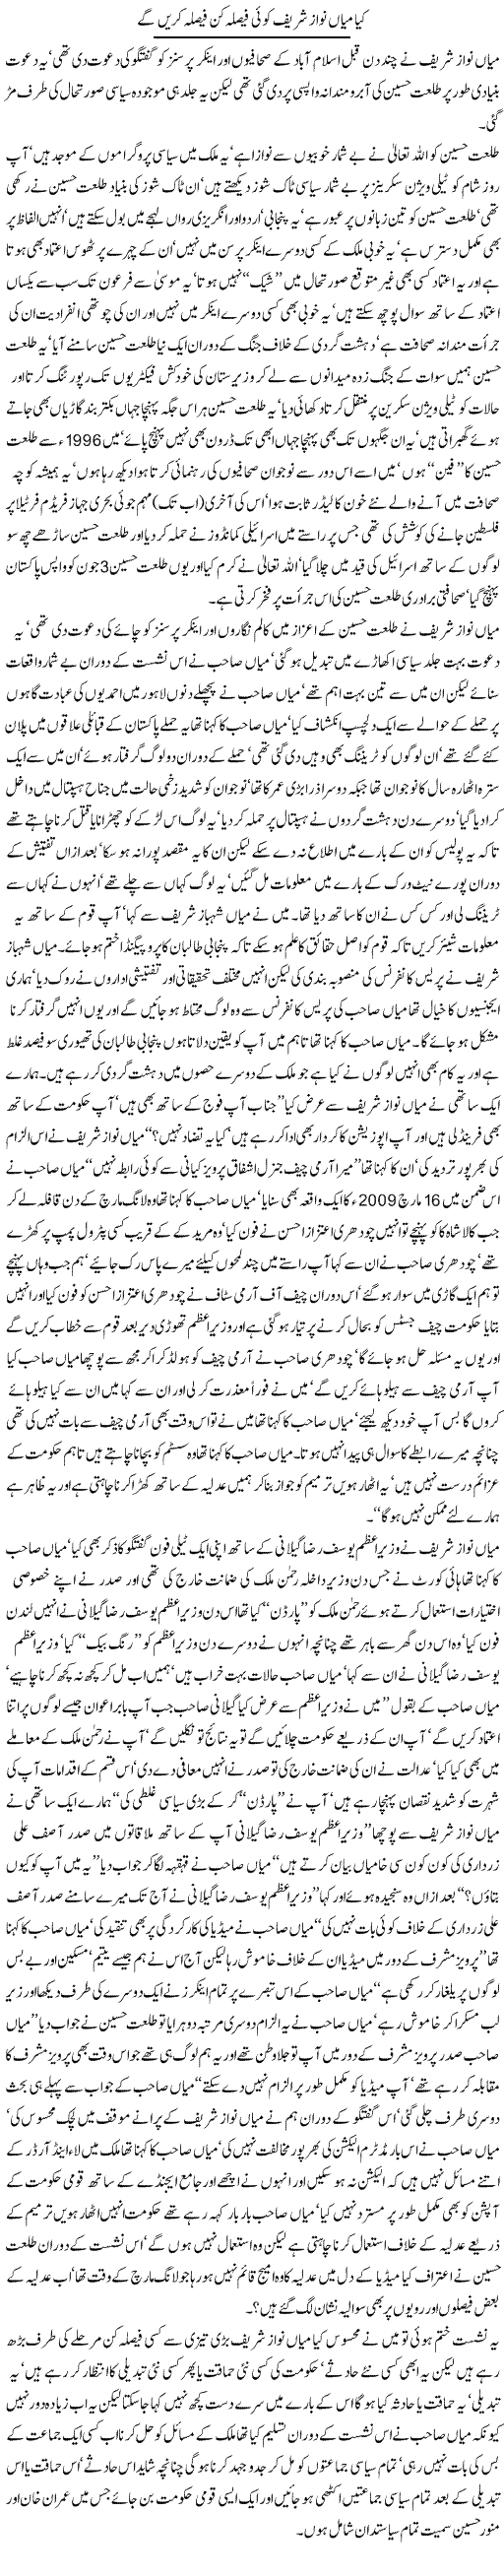 Mian Nawaz ka fasla Express Column Javed Chaudhry 13 June 2010